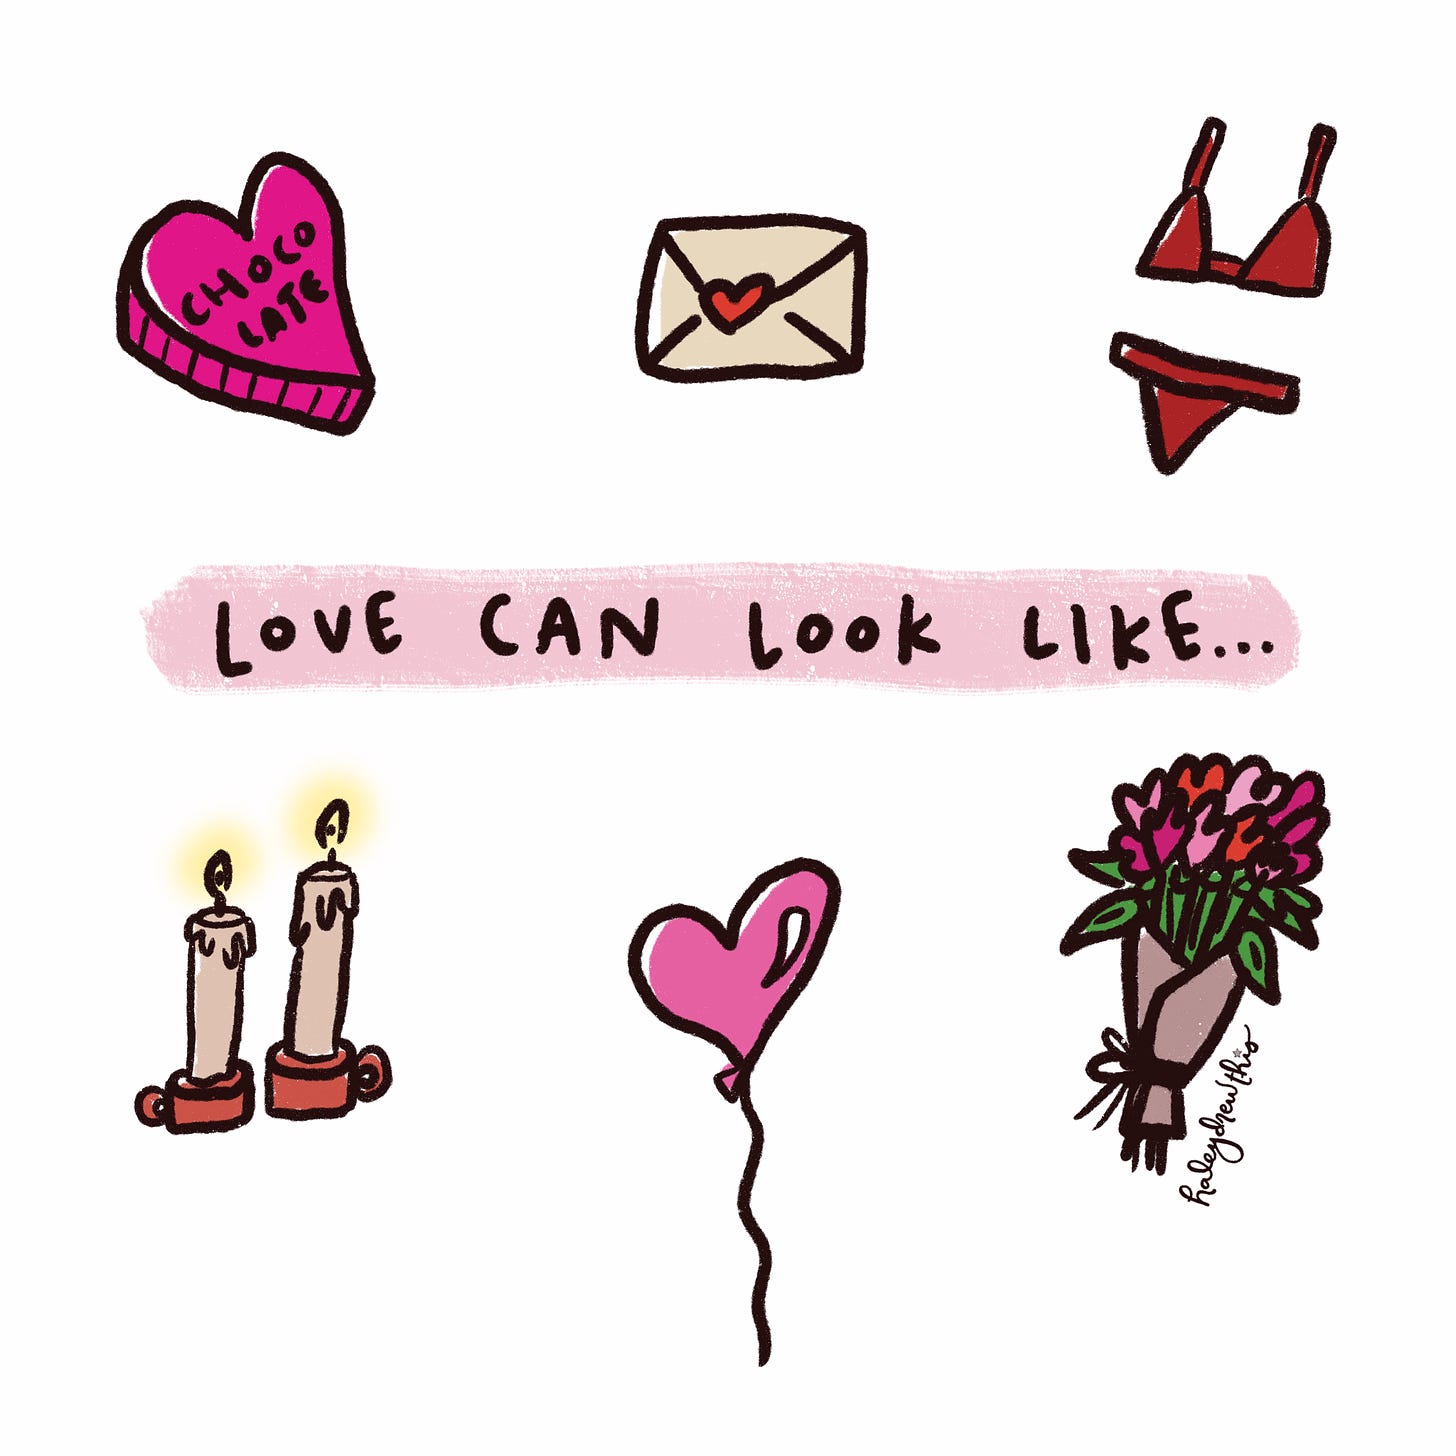 Love can look like